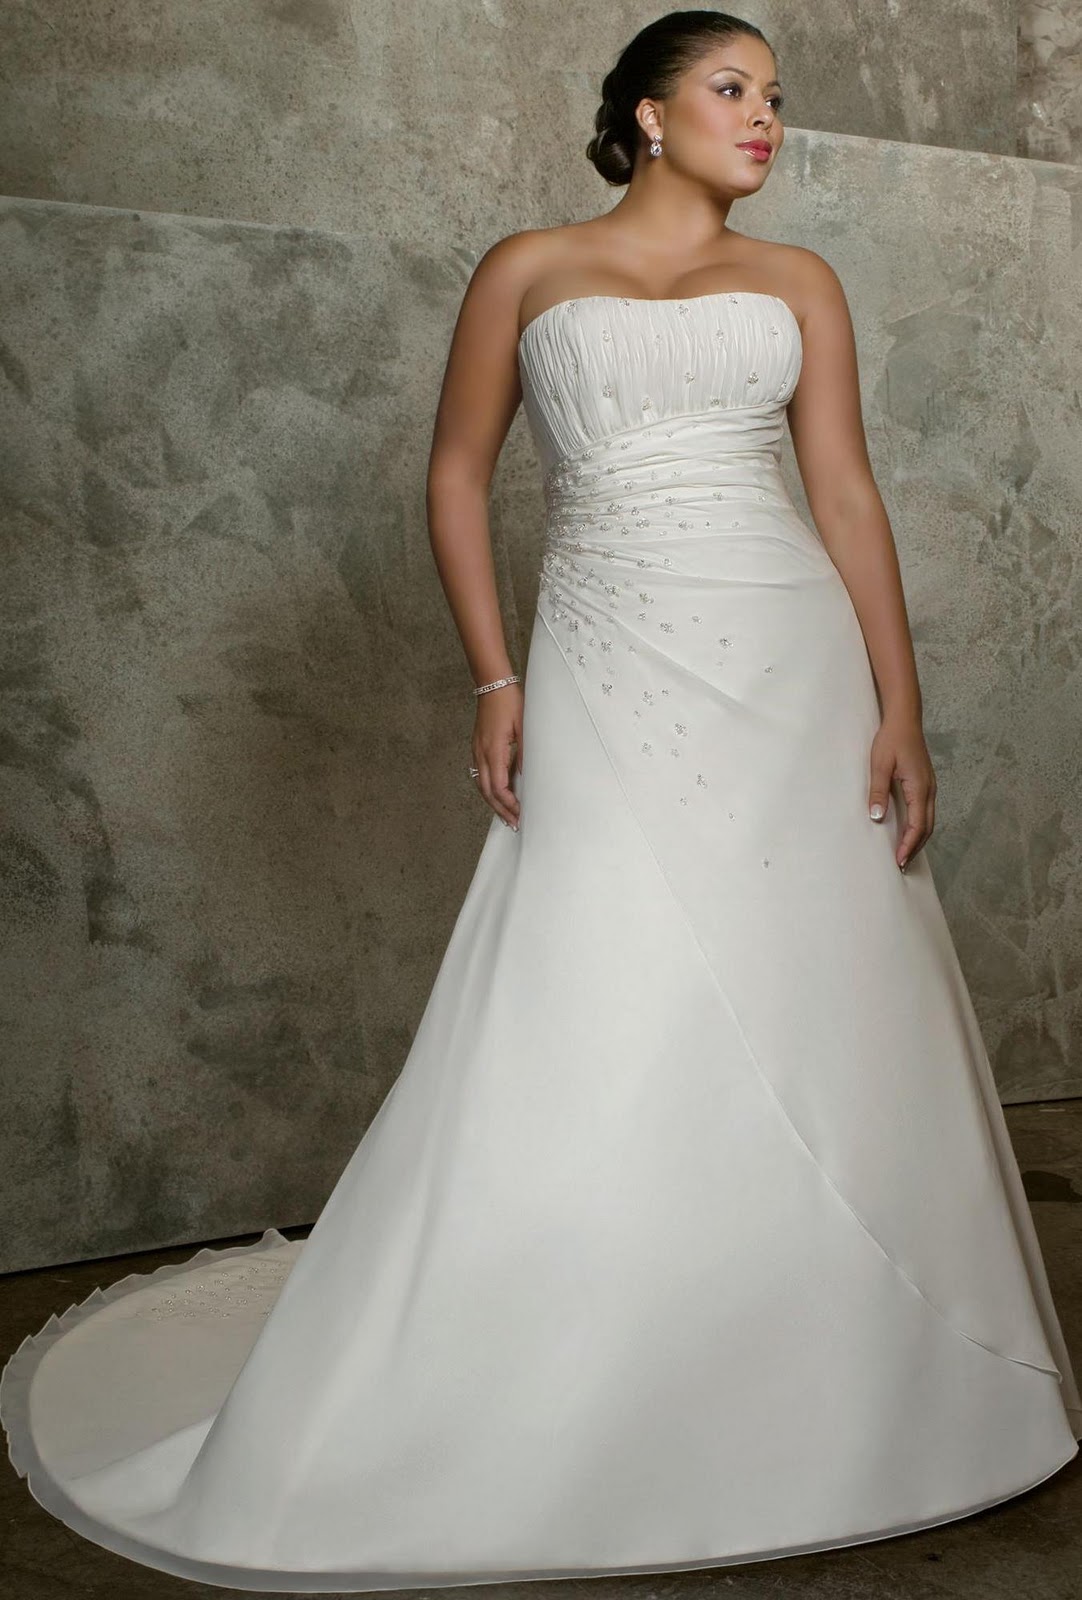 Discount White Strapless Natural Waist Plus Size Wedding Dress kw010